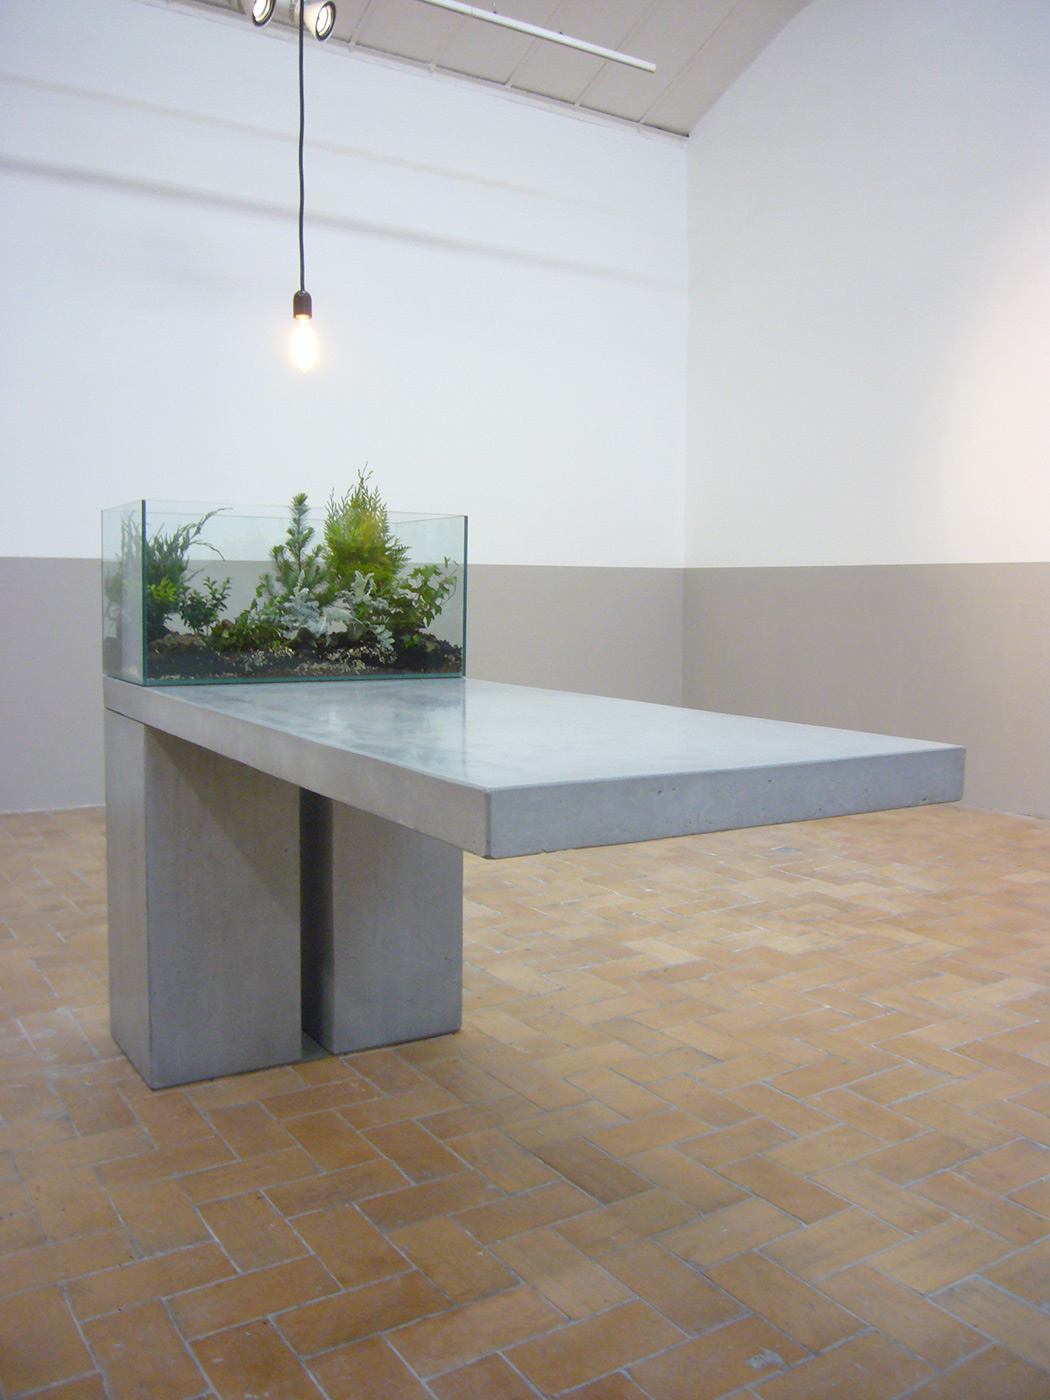 Andrea Blum - Table rock plant, 2013